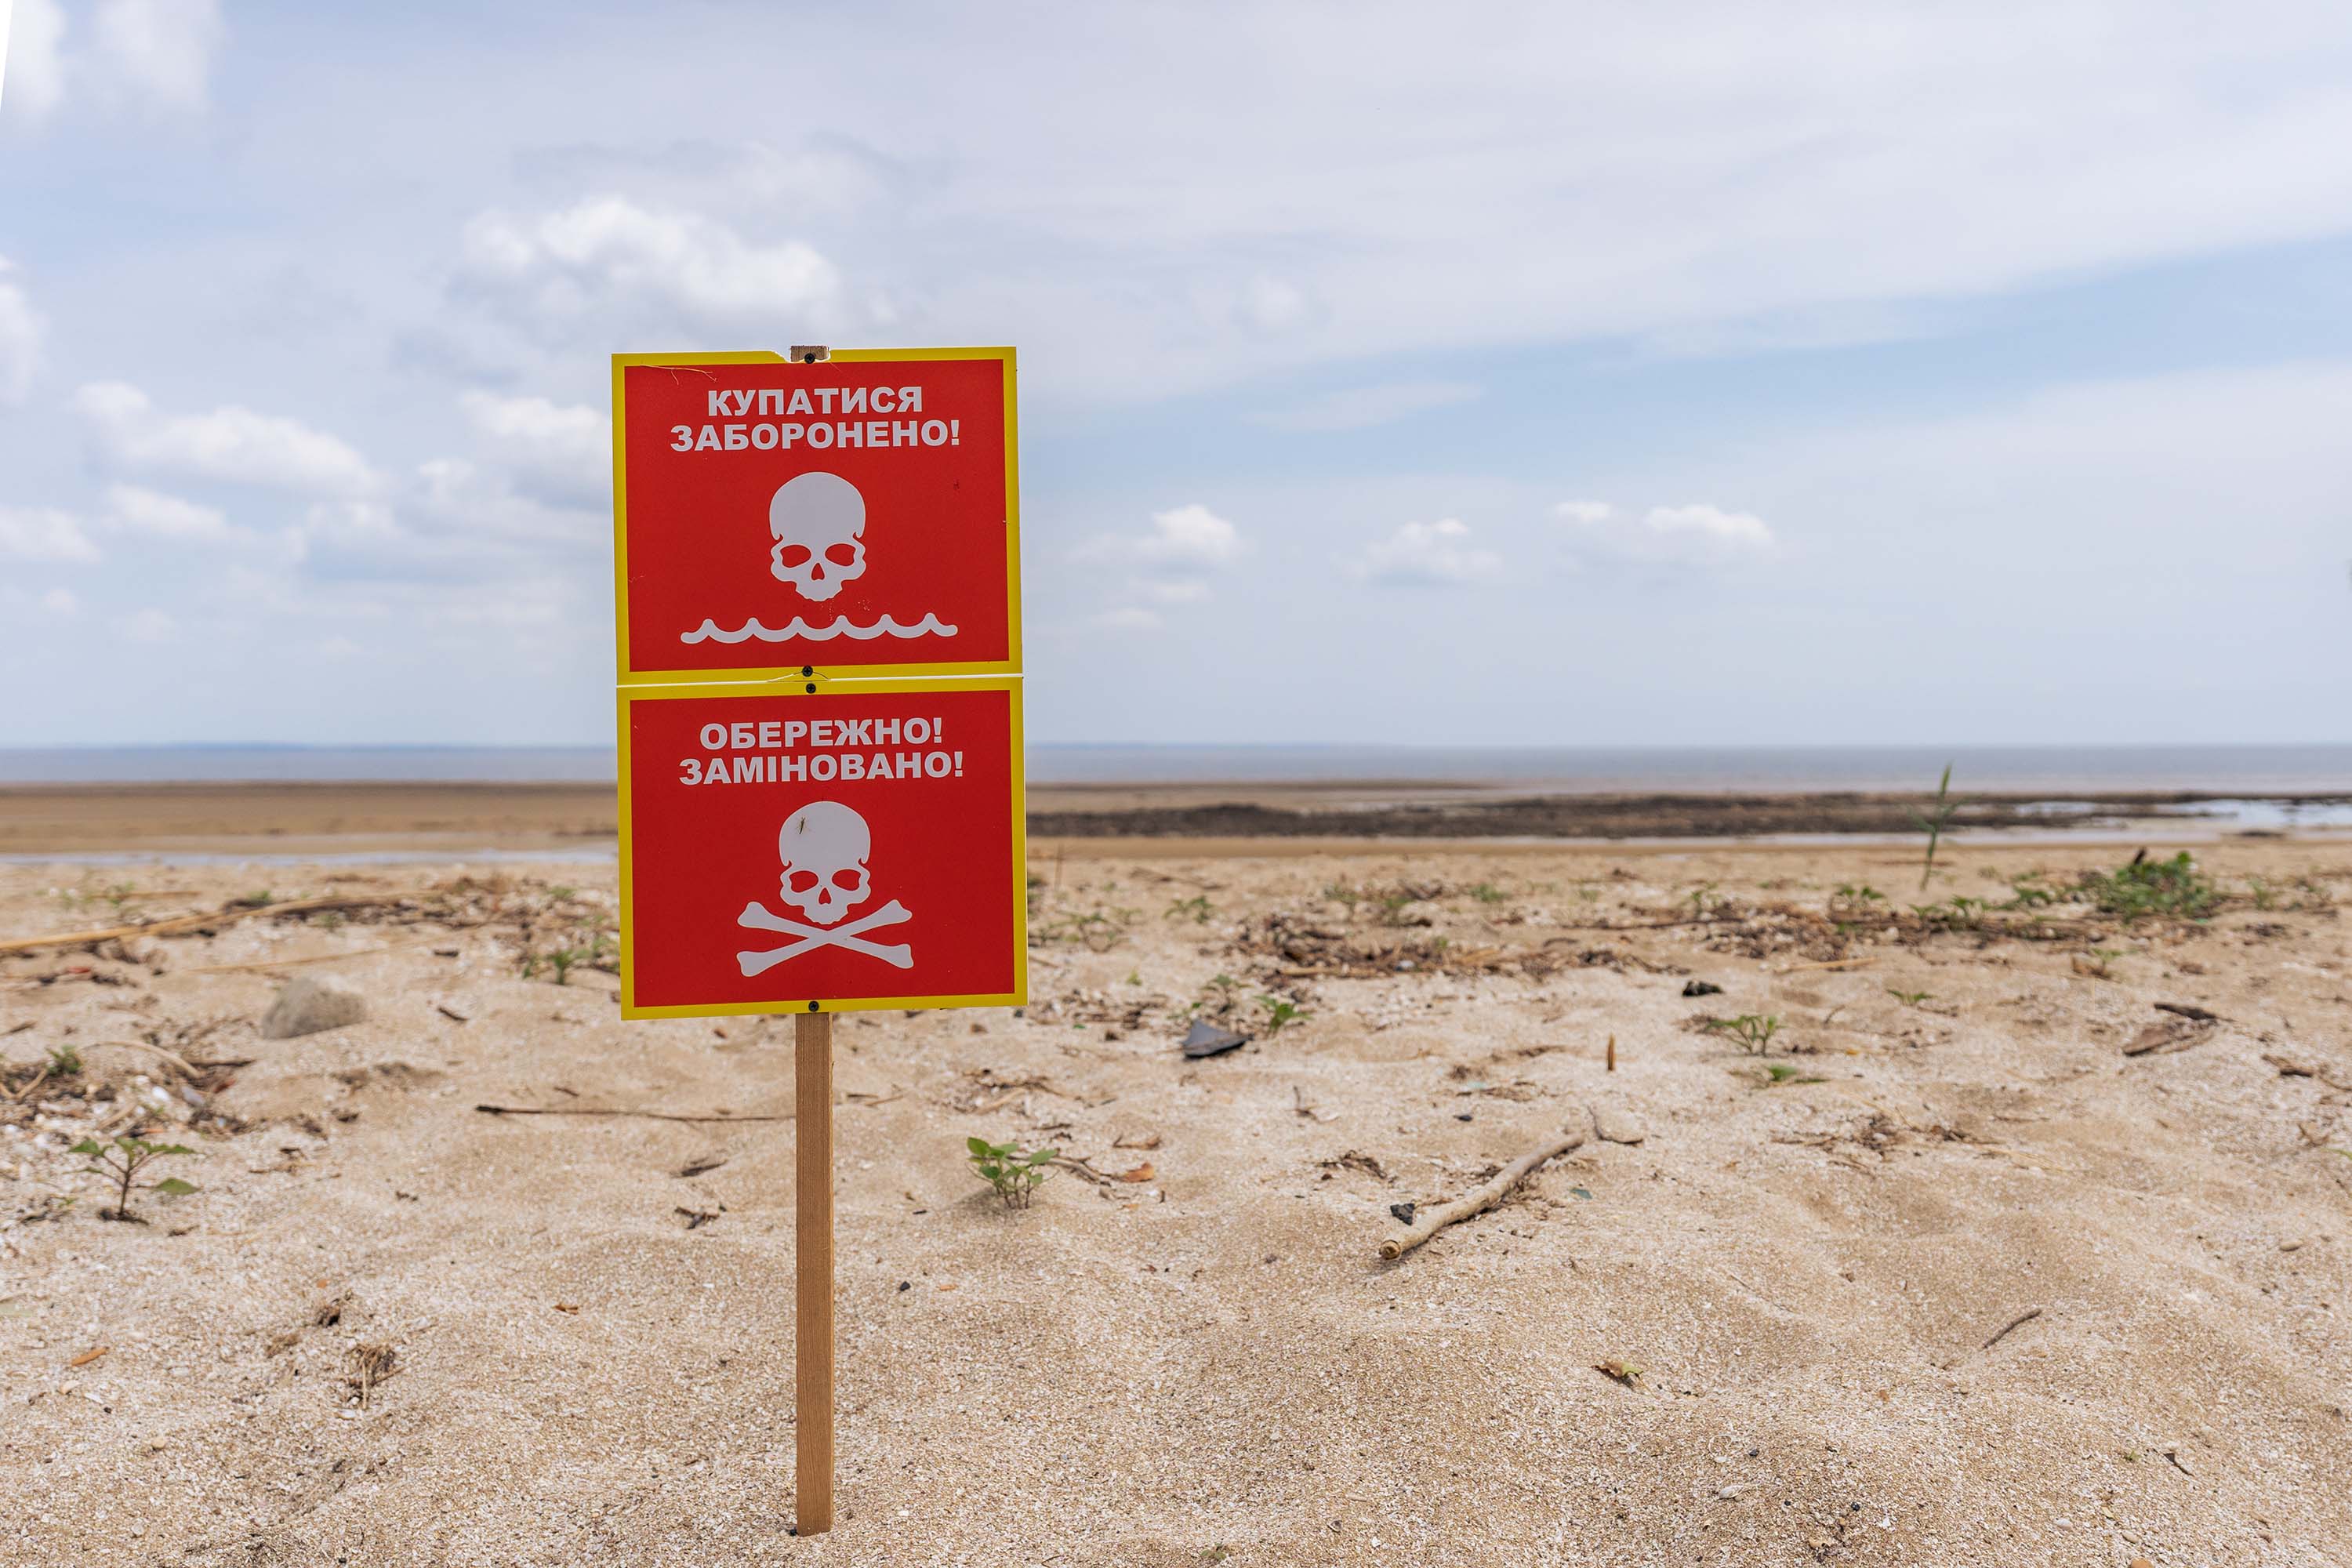 A sign warns of mines along the shore of Kakhovka Reservoir, on June 13, in Novovorontsovka, Ukraine. 